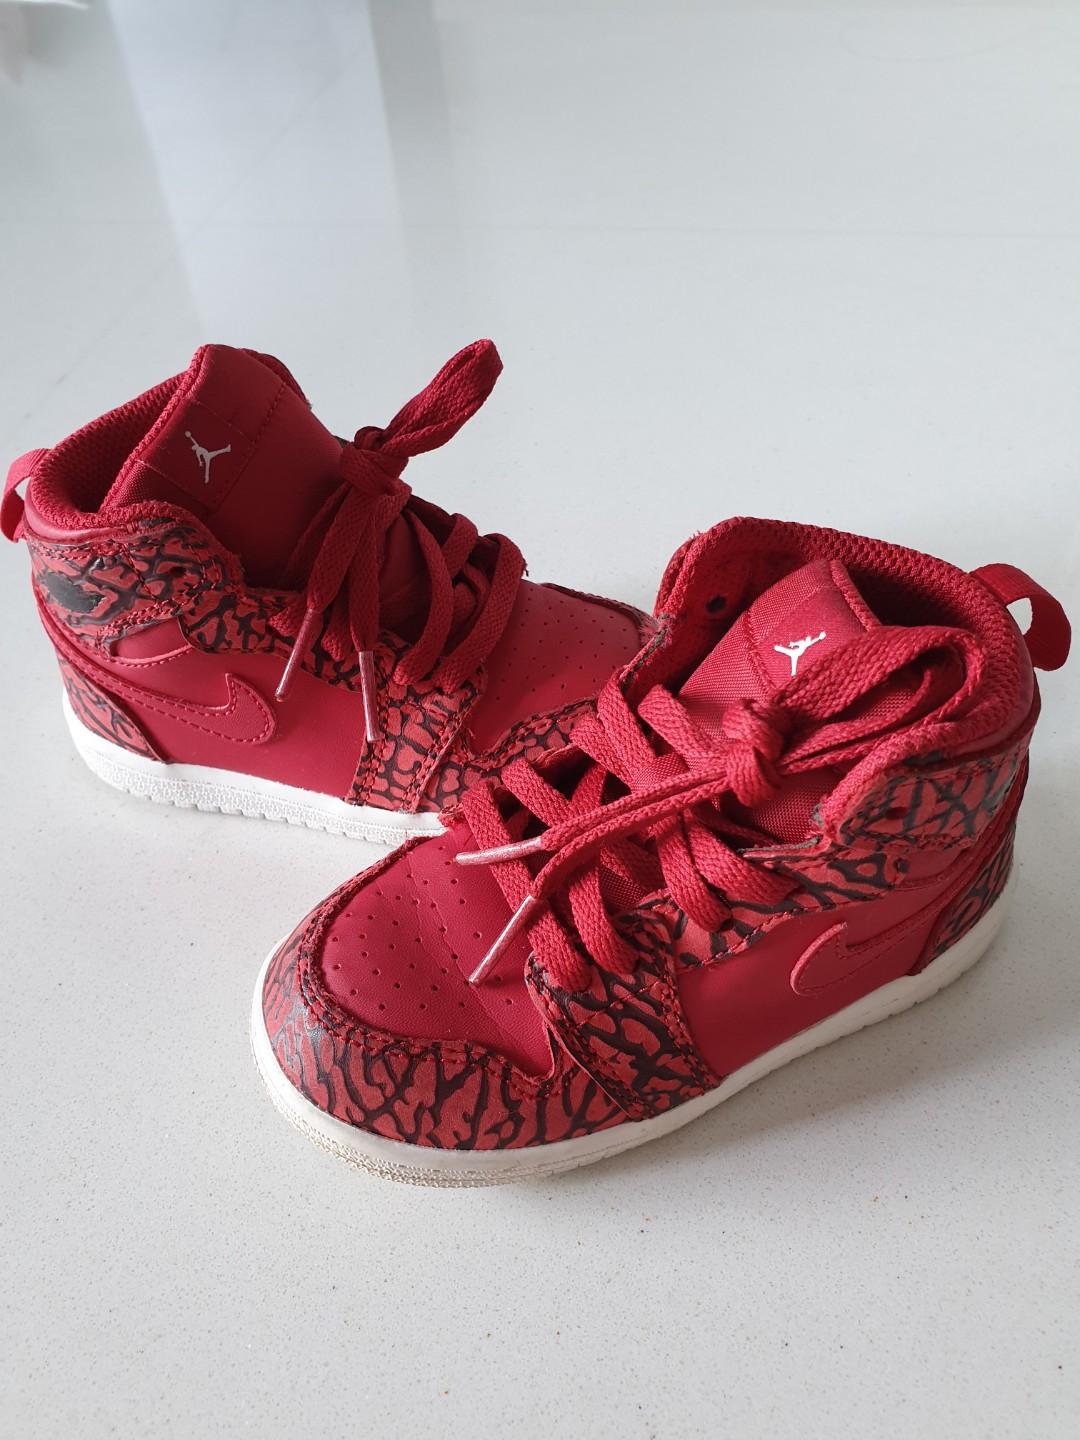 Nike Air Jordan limited edition red 